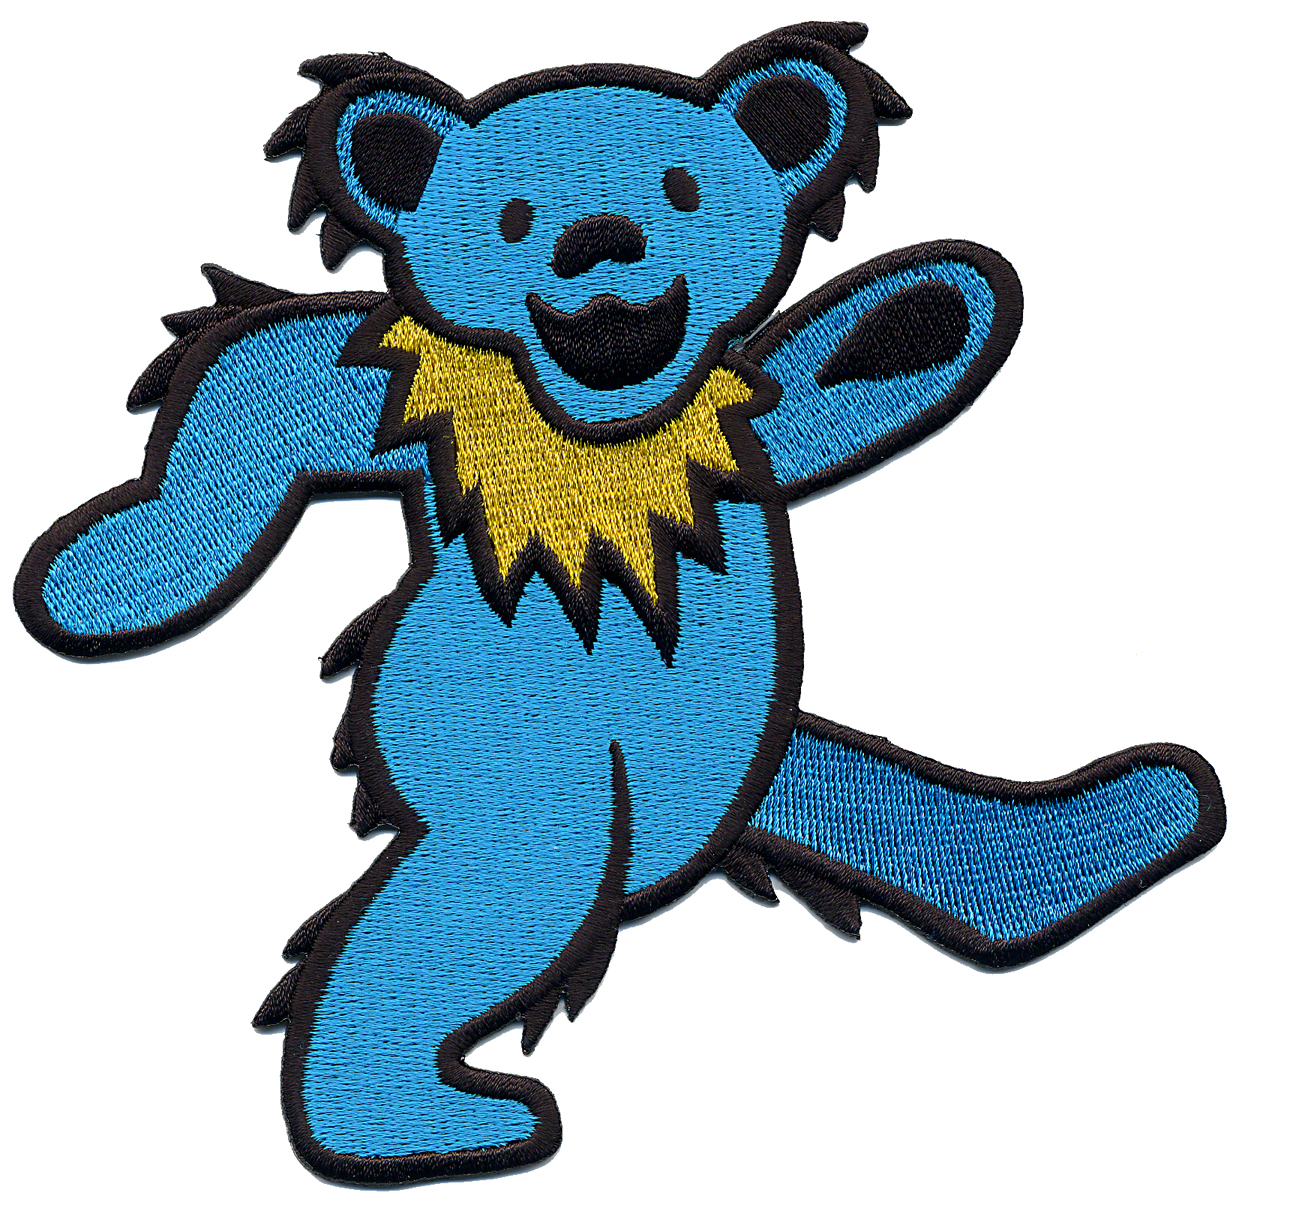 Grateful Dead Dancing Bears. Bear Dance. Grateful Dead - Yellow Bear. Grateful Dead Green Bear. Dance bear com